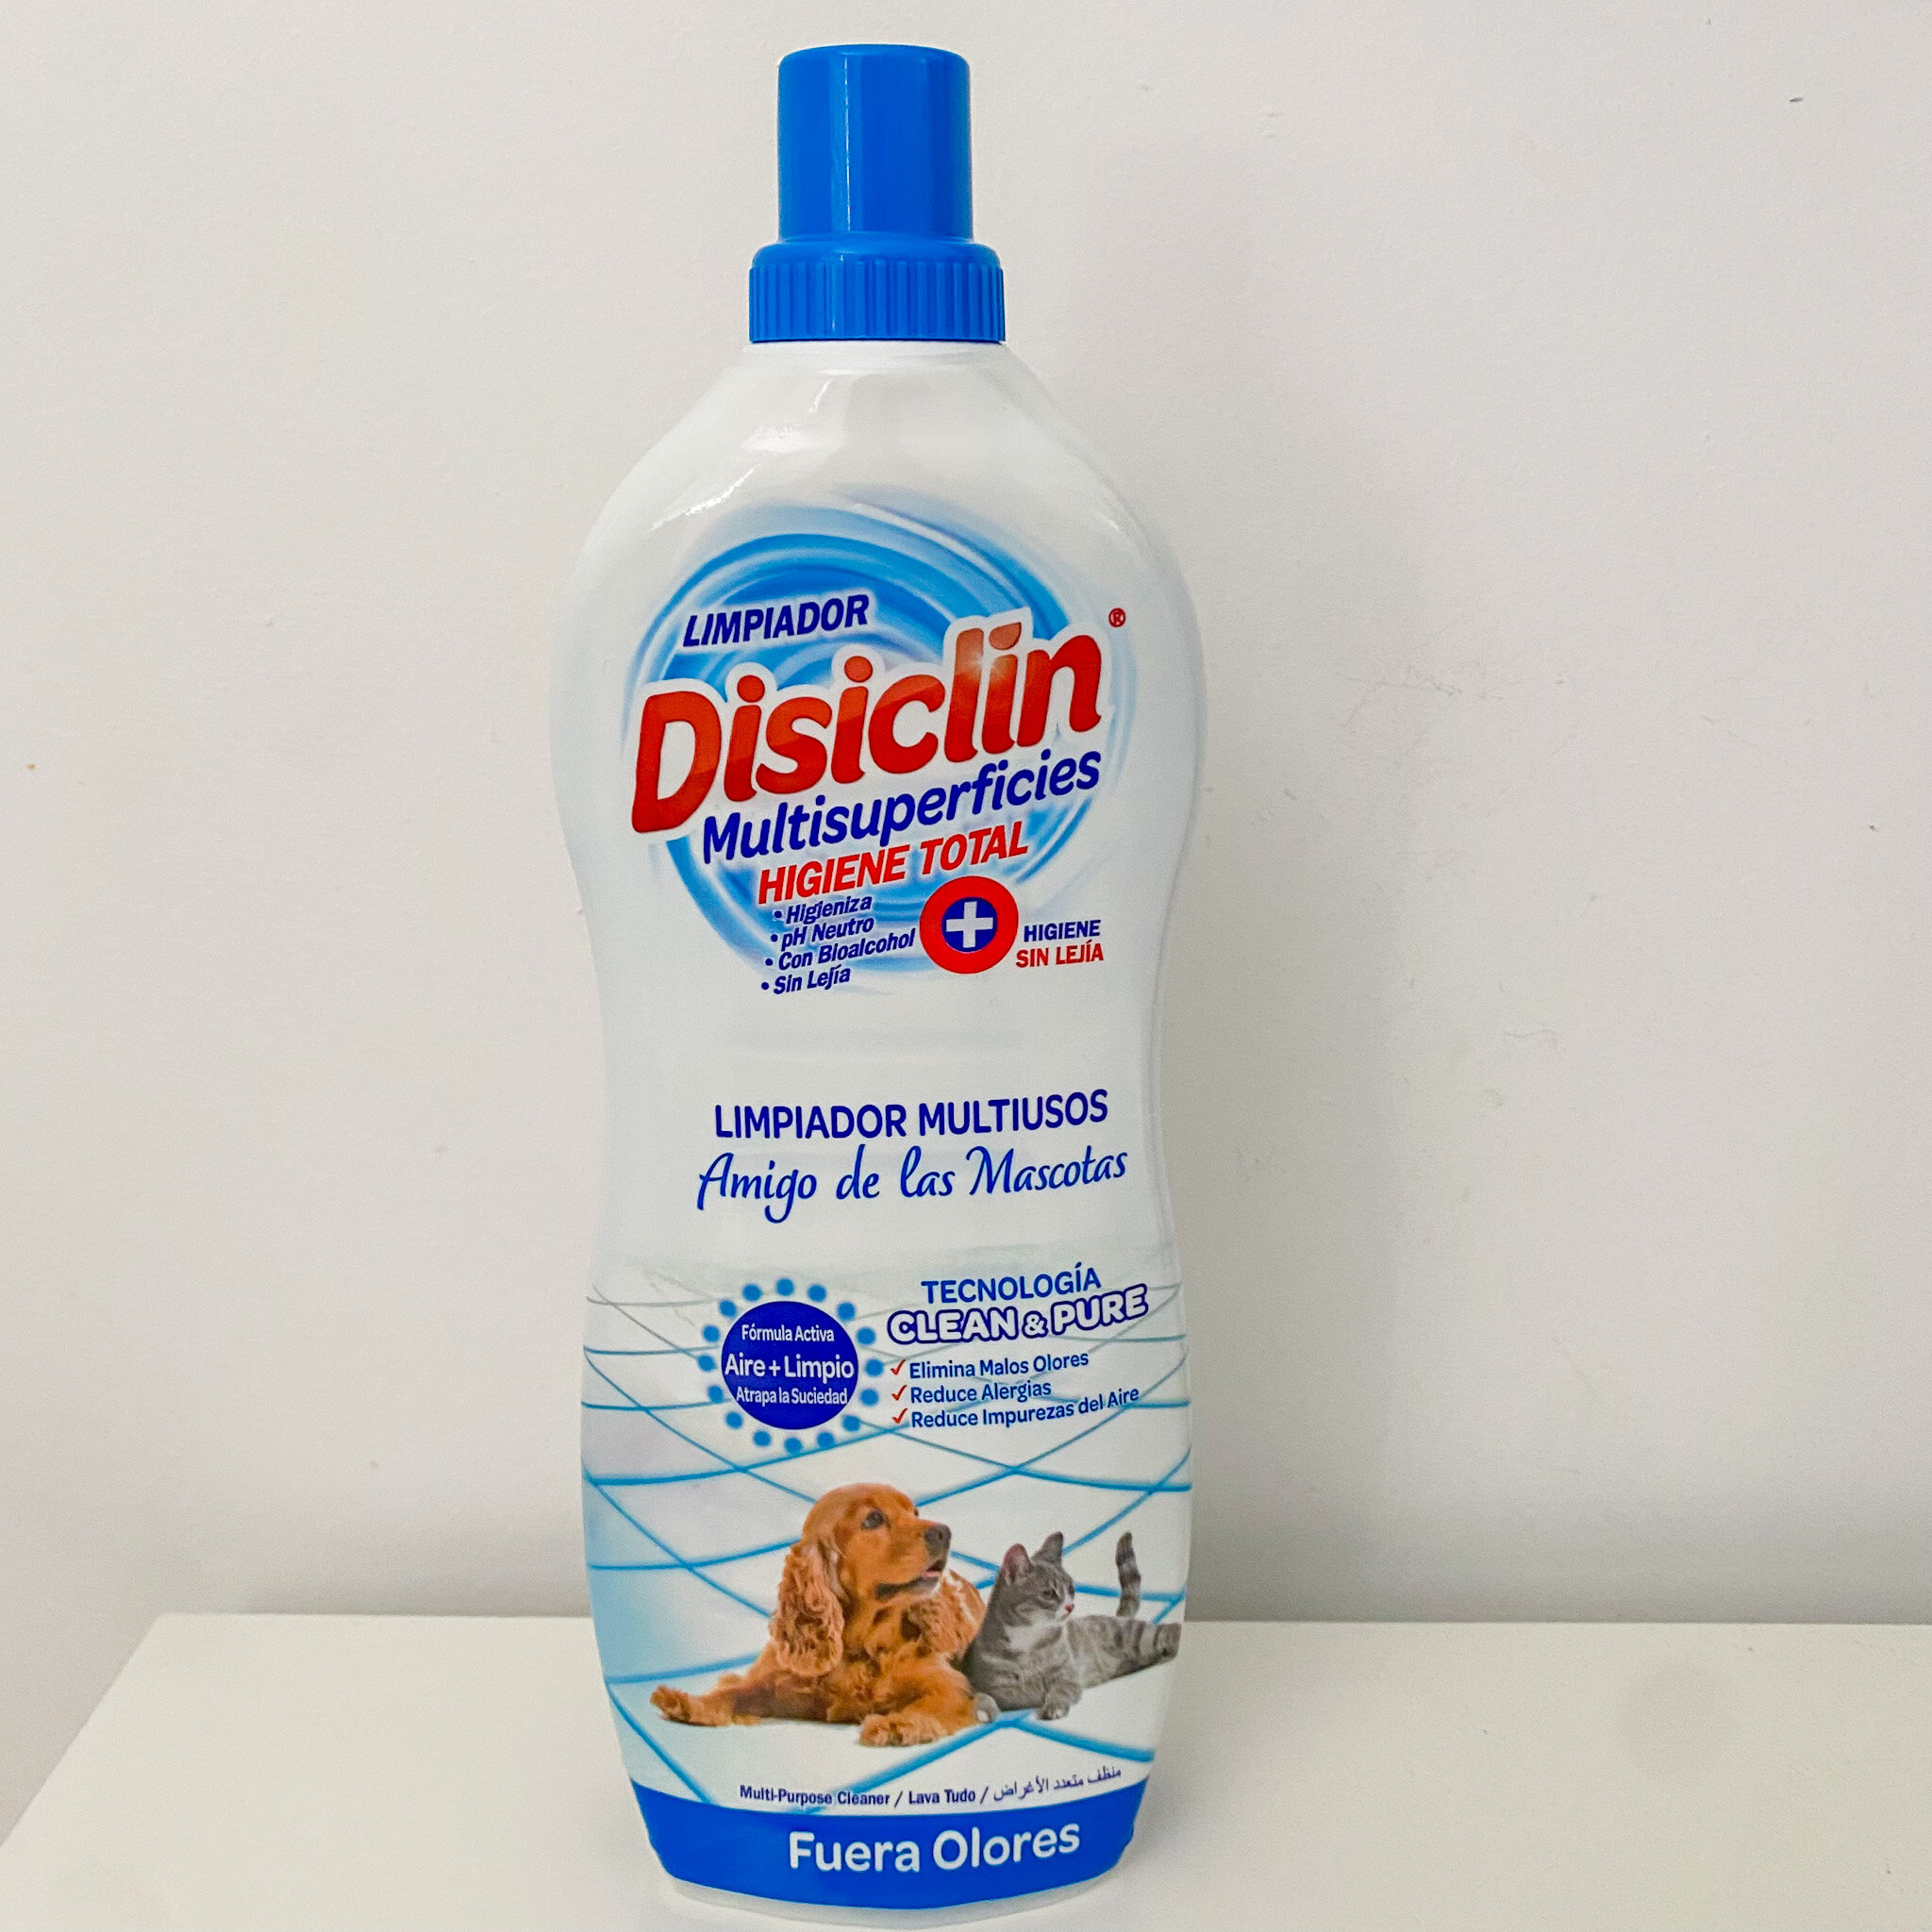 Limpiador Desinfectante Multisuperficies DISICLIN 5 Ltr.